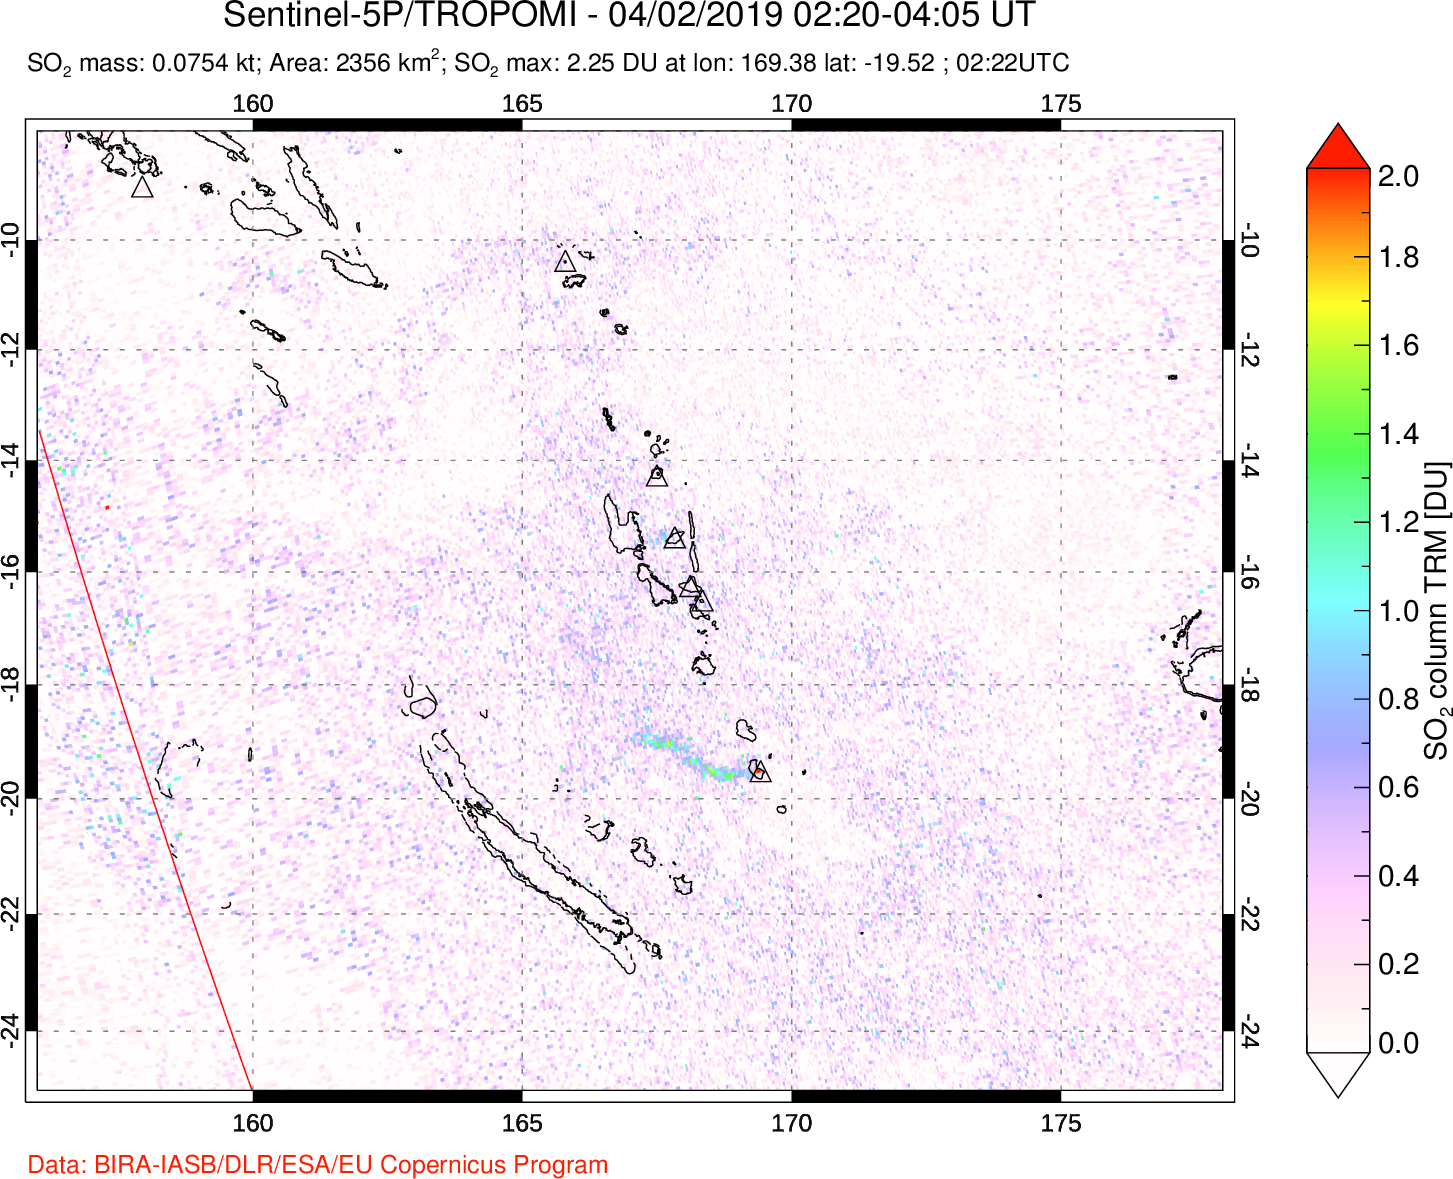 A sulfur dioxide image over Vanuatu, South Pacific on Apr 02, 2019.